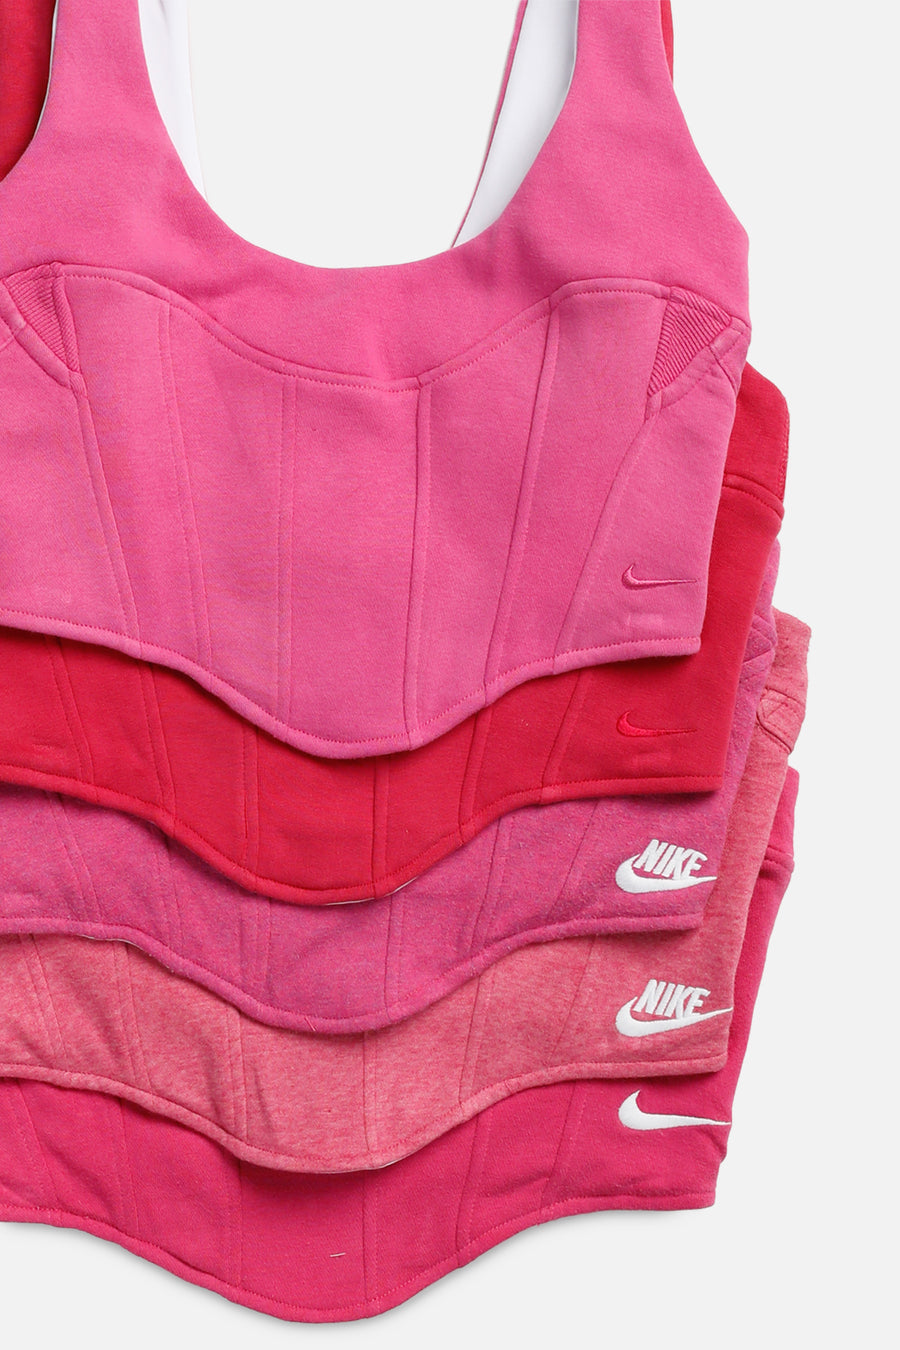 Rework Nike Sweatshirt Bustier - XS, S, M, L